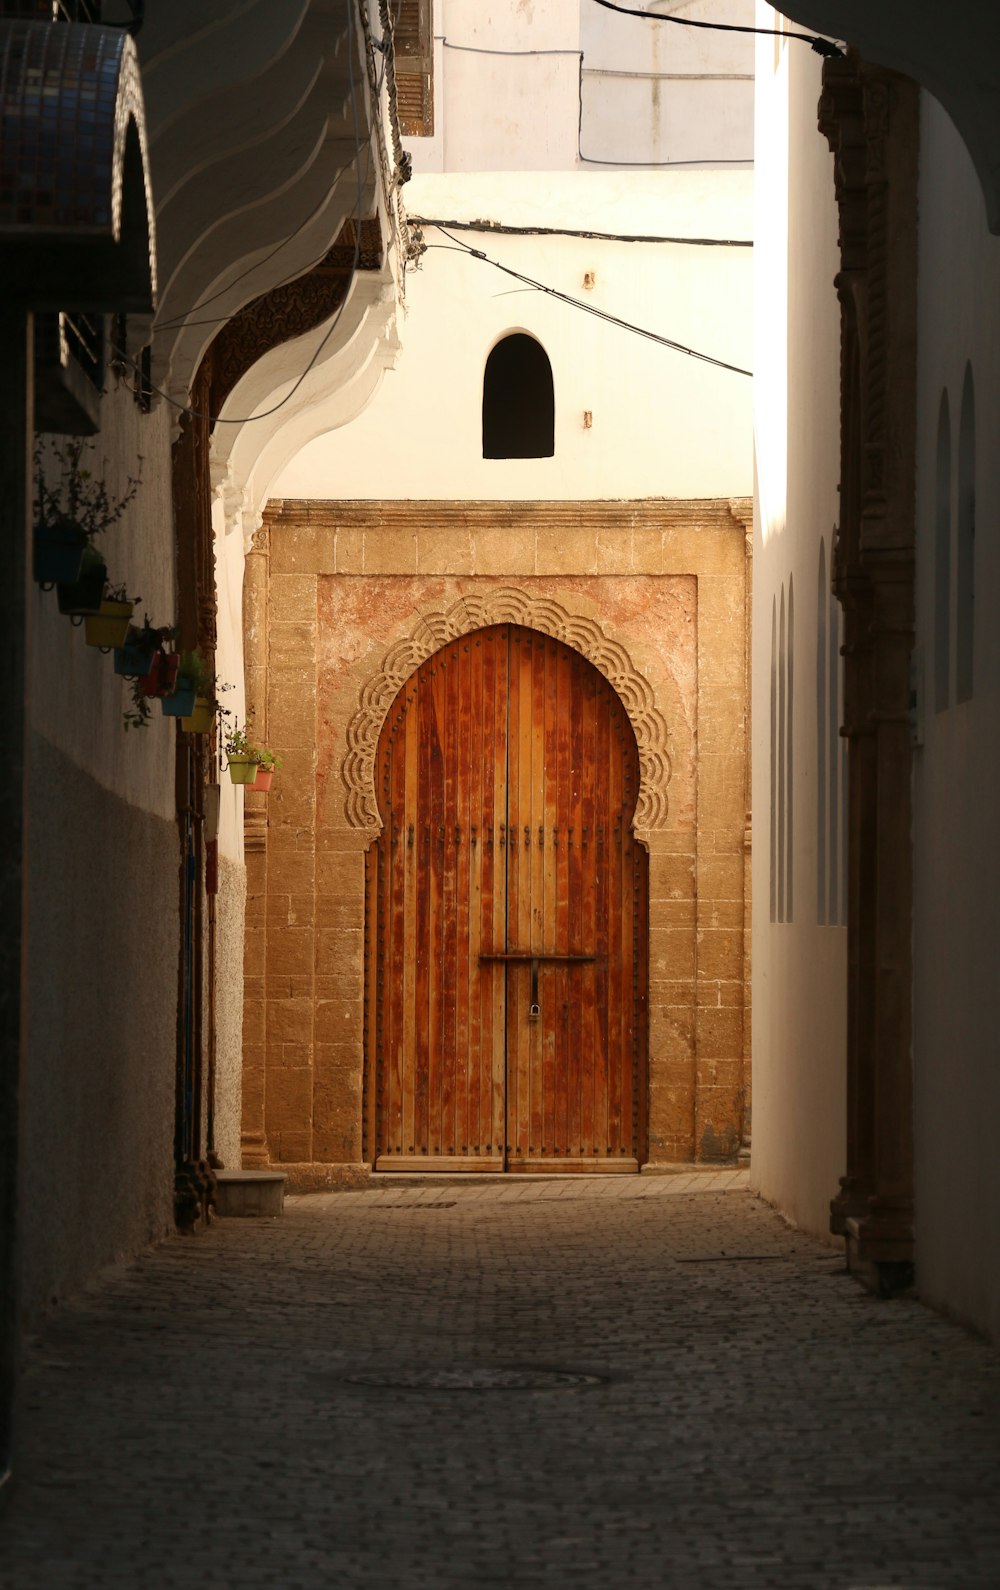 a narrow alleyway with a wooden door